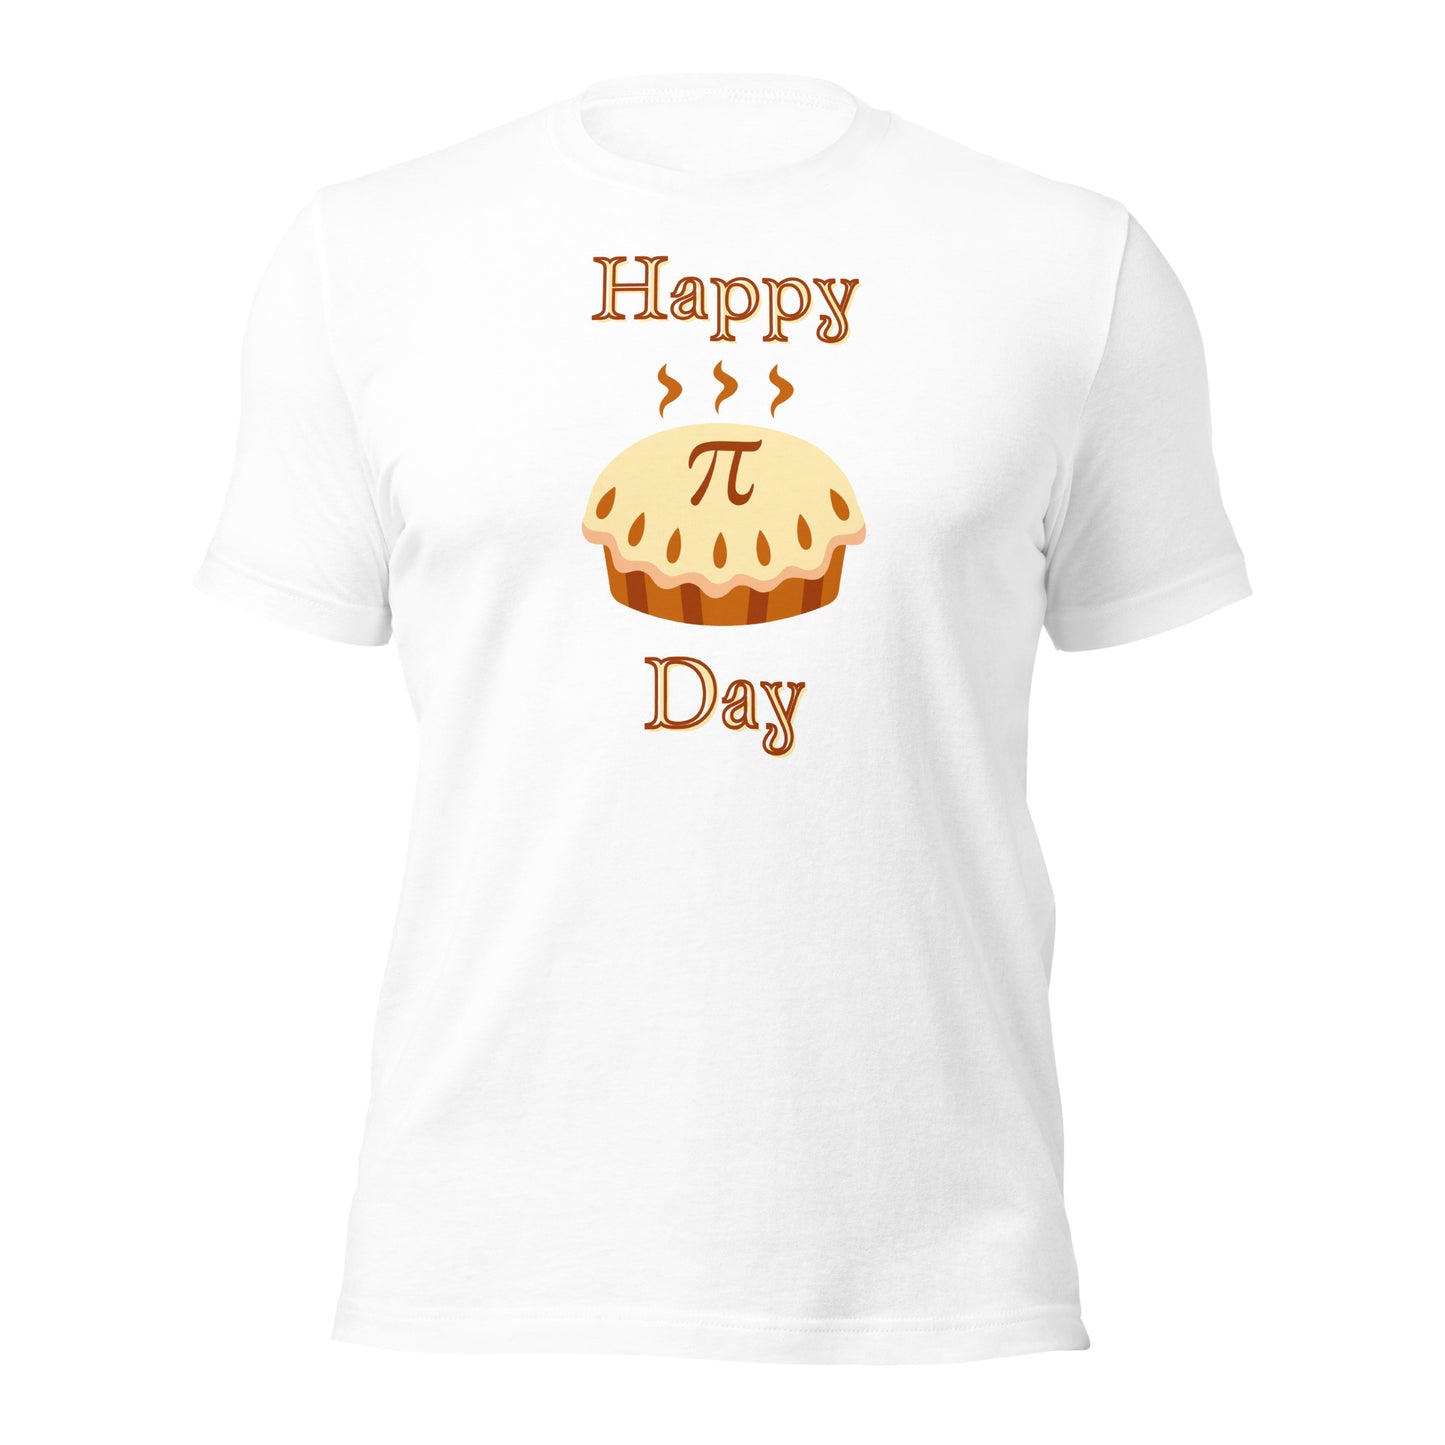 Math enthusiast wearing a Pi Day celebration shirt